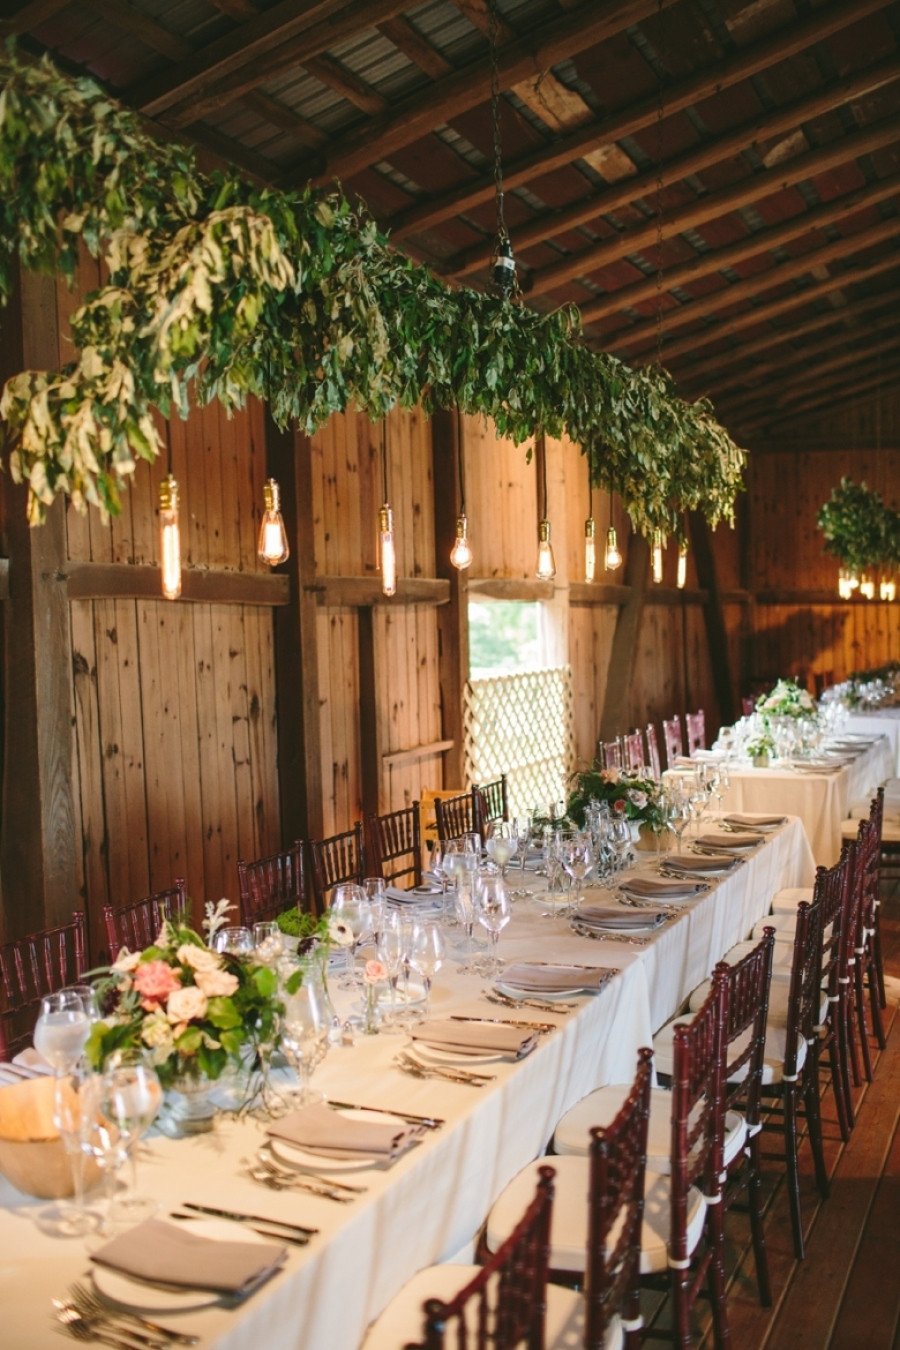 Decor Ideas for Wedding Reception Luxury 25 Sweet and Romantic Rustic Barn Wedding Decoration Ideas – Elegantweddinginvites Blog